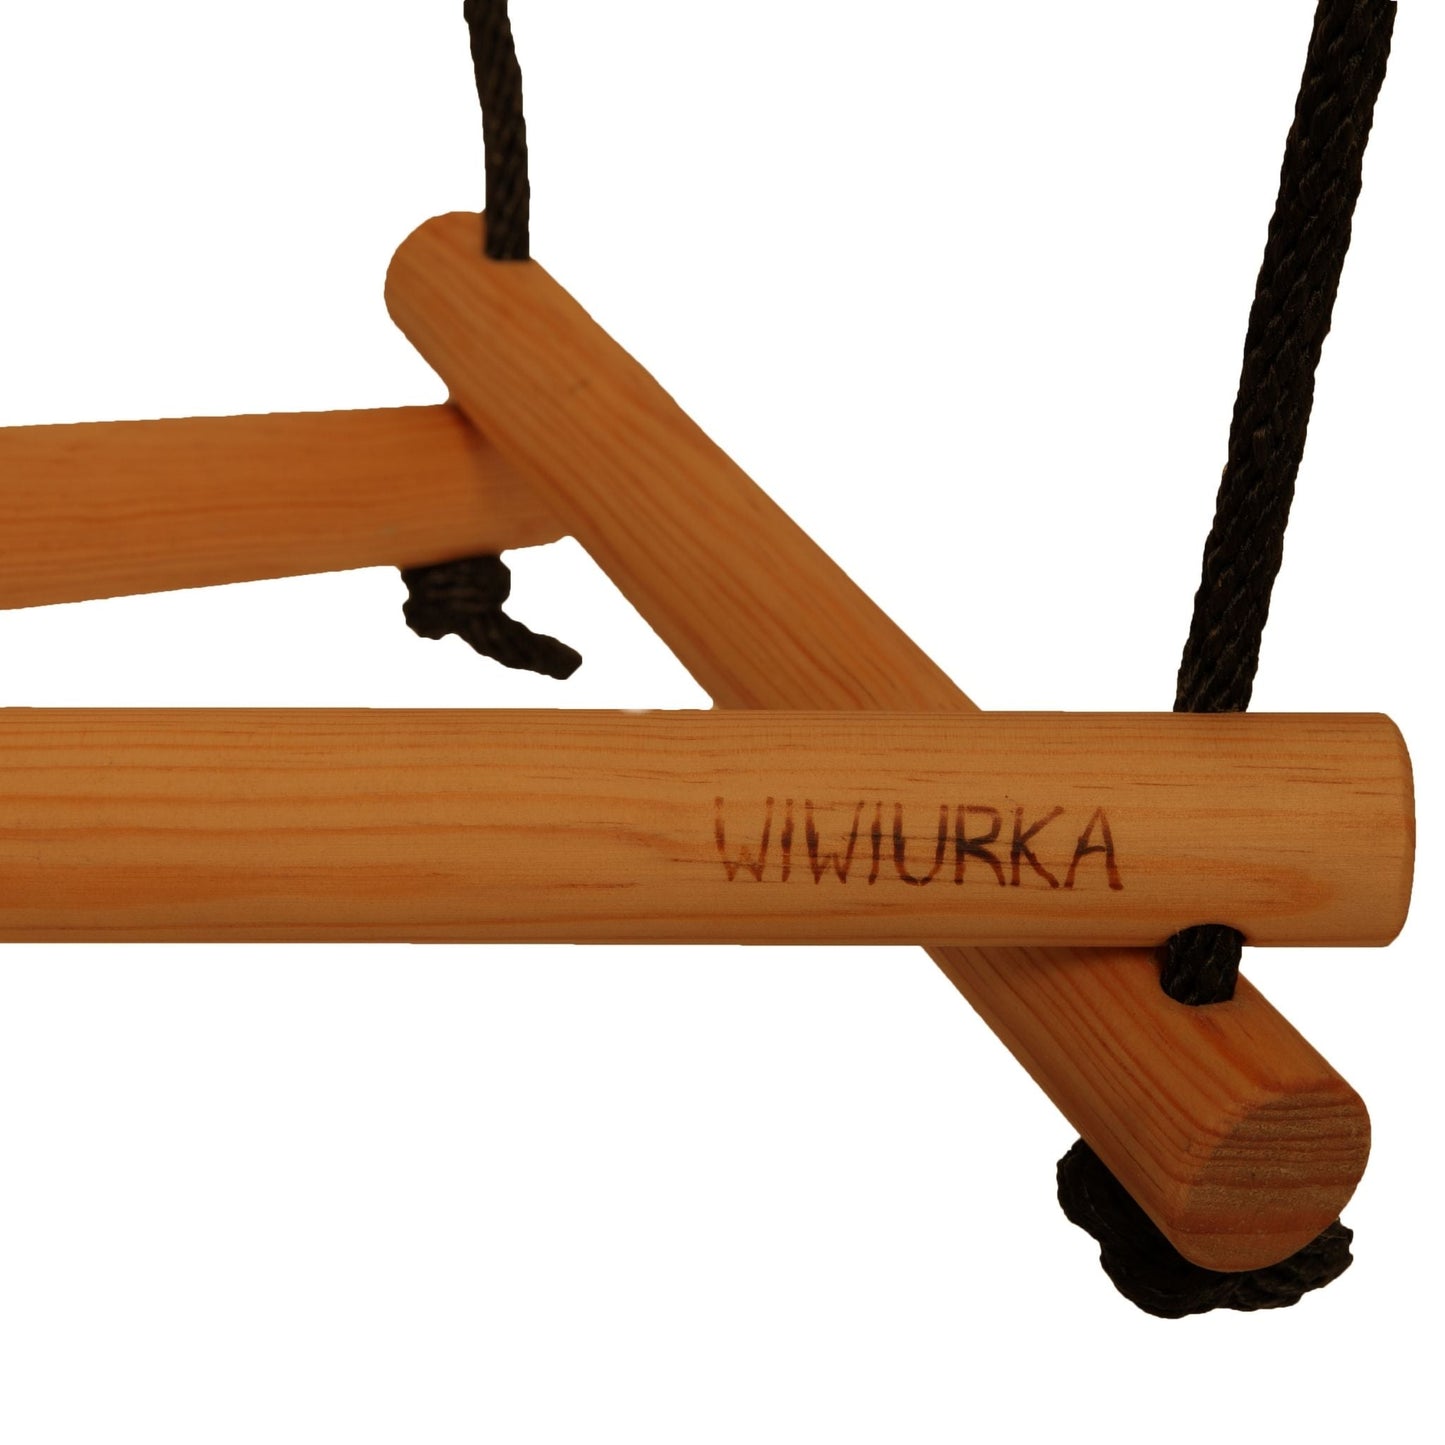 Wiwiurka Wooden Climber Triangular Rope Ladder